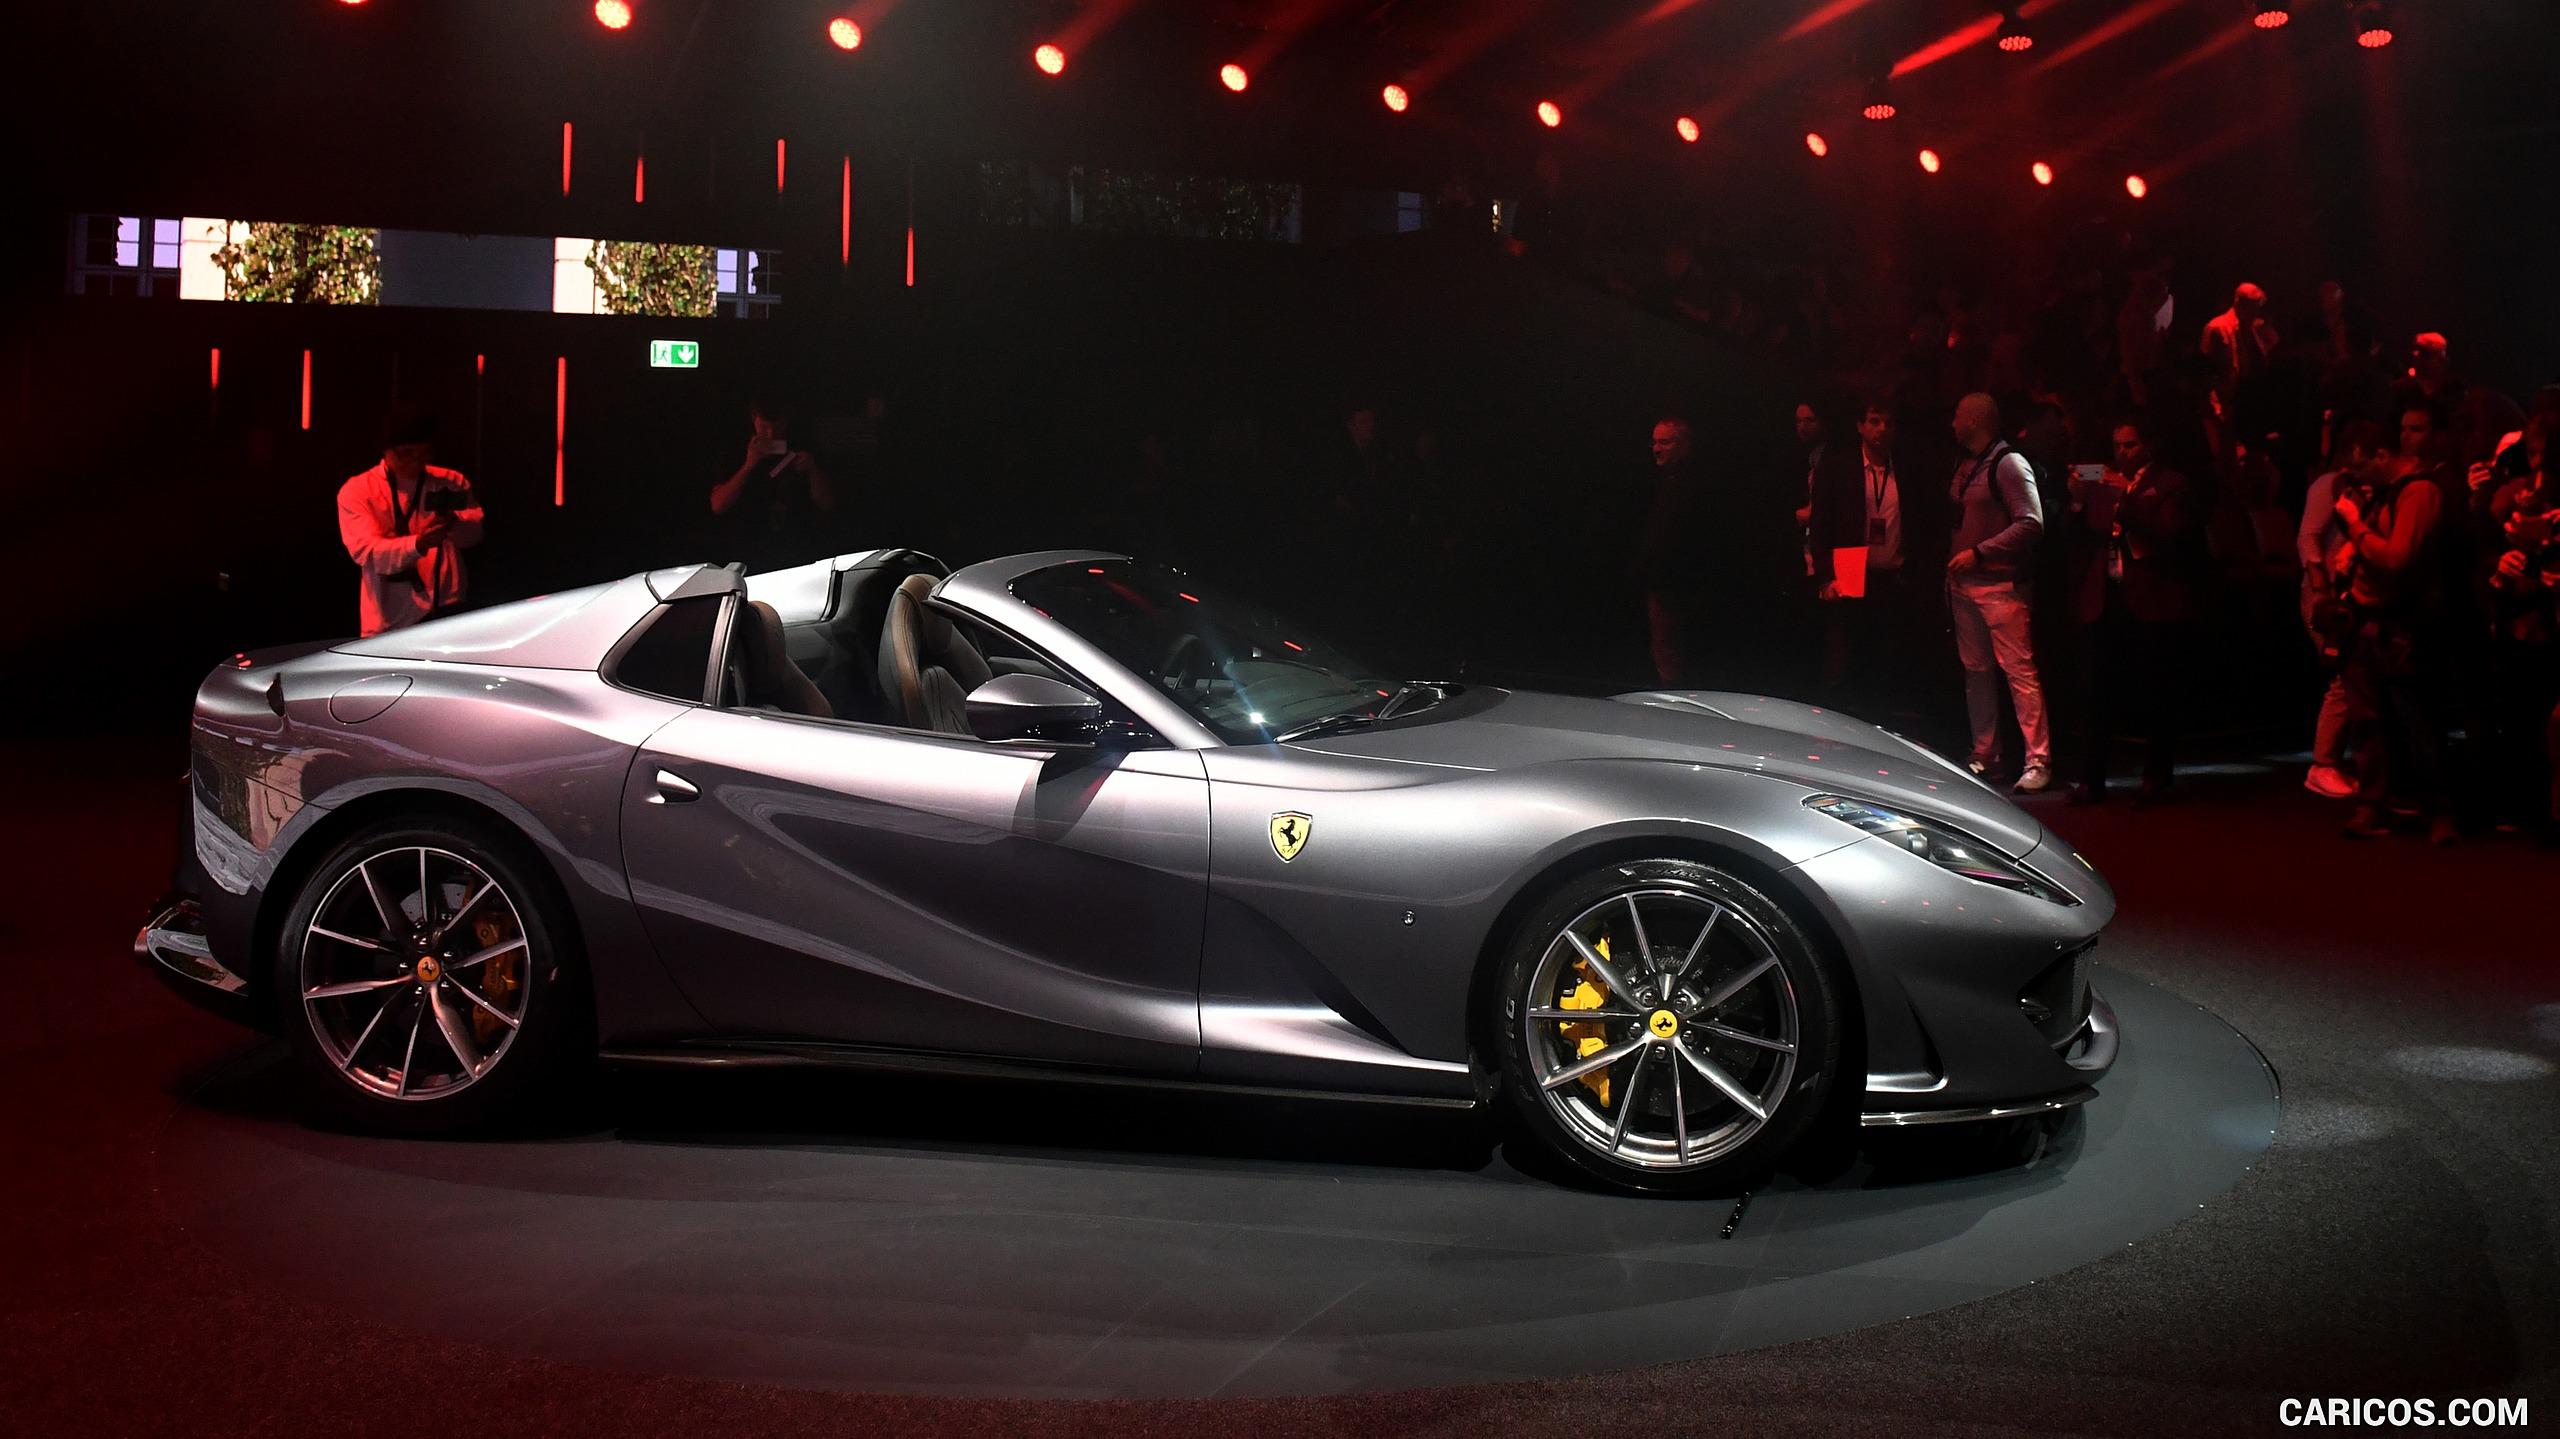 Ferrari Gts Presentation Caricos